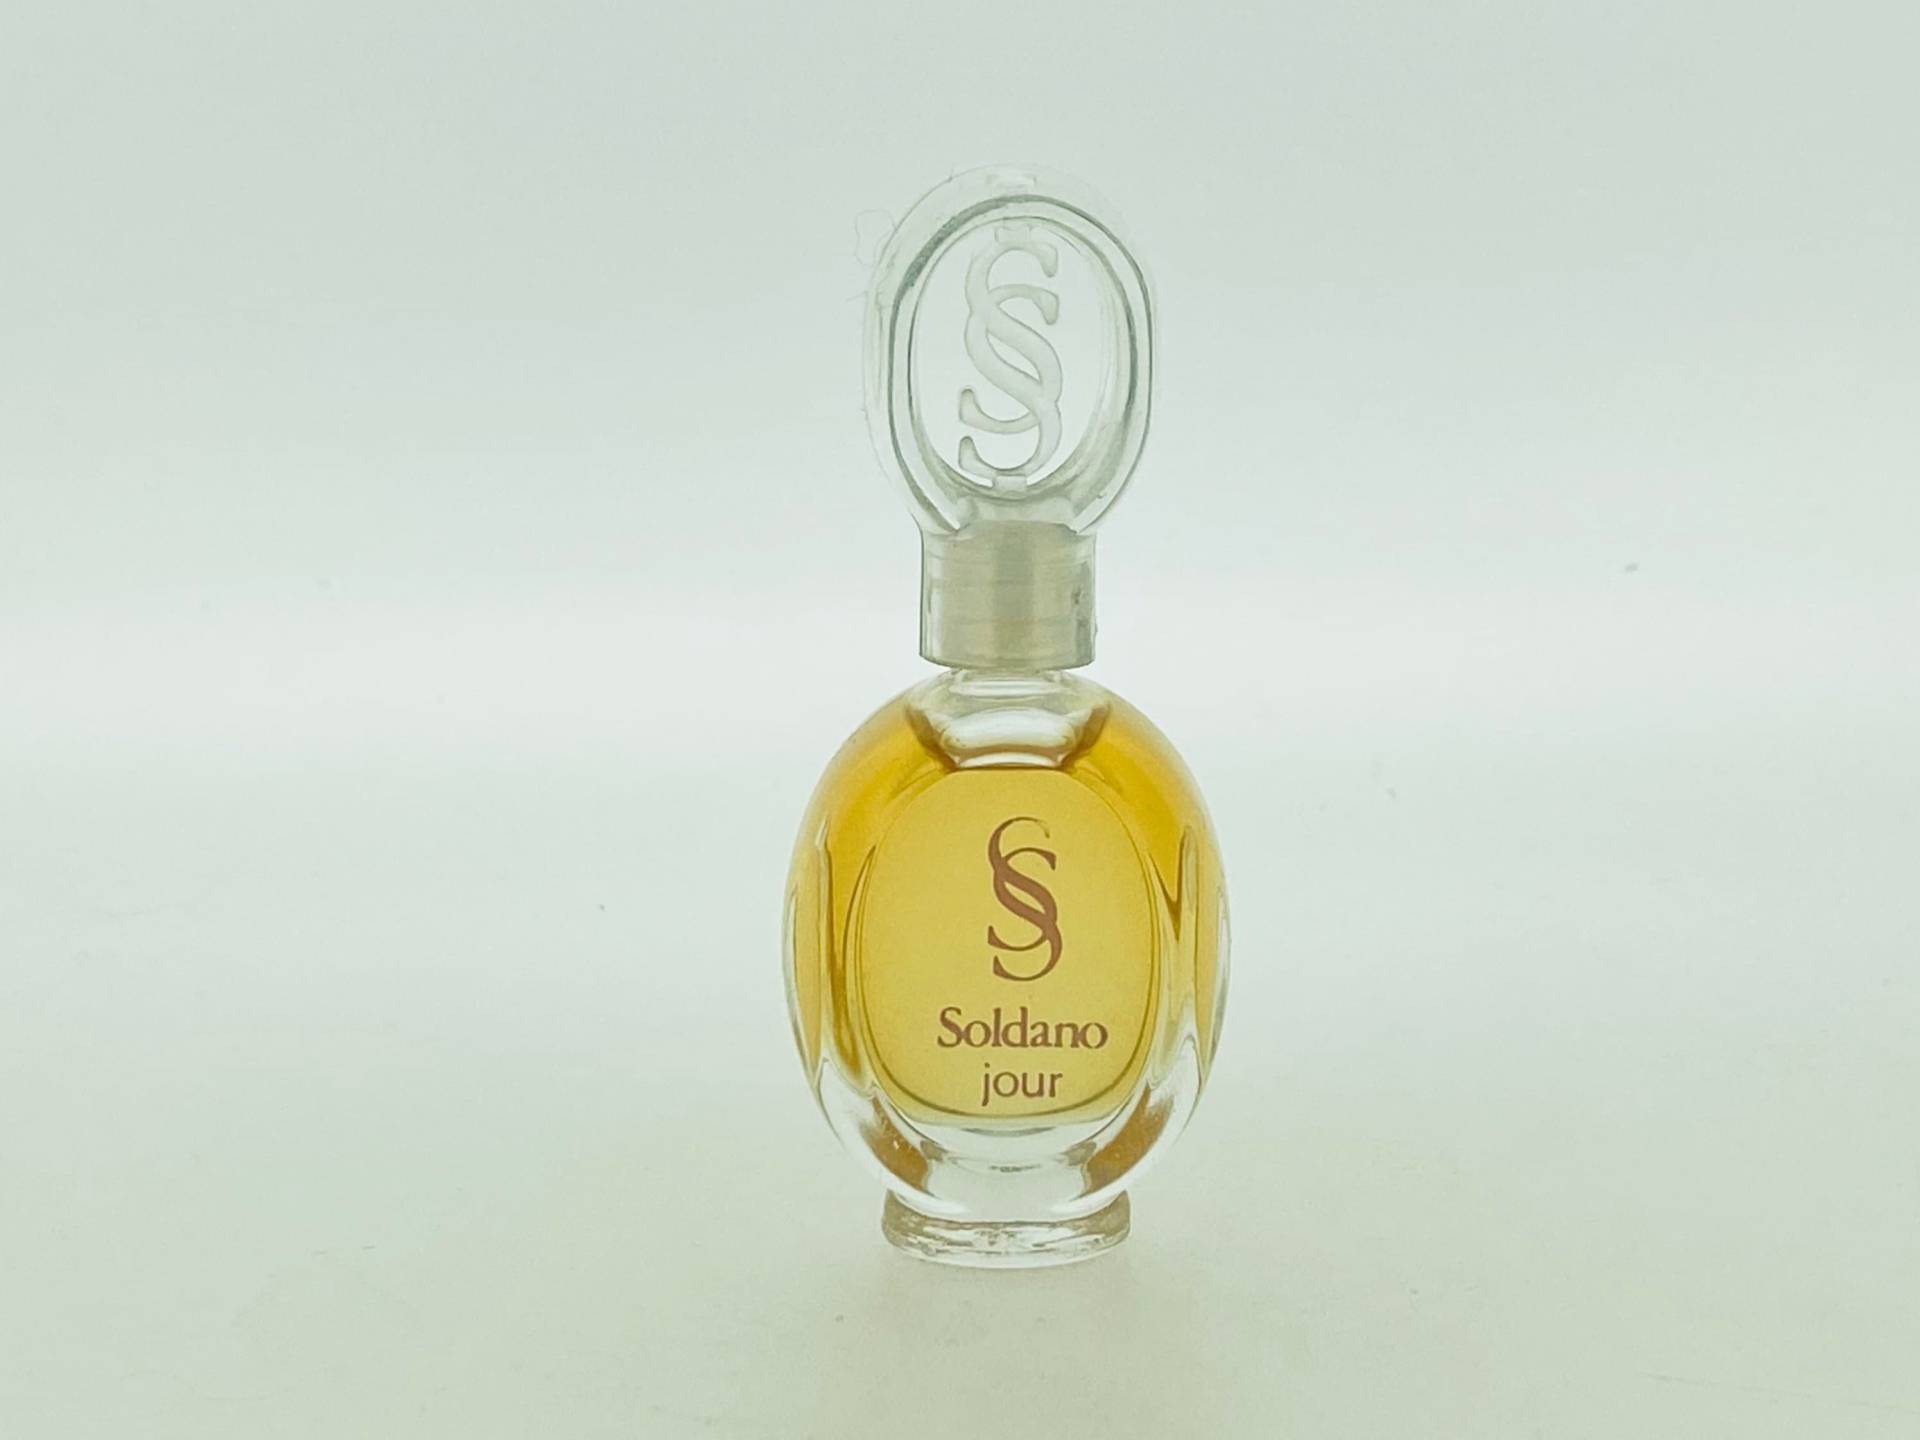 Sergio Soldano 1987 Eau De Parfum Miniature 5 Ml von VintagGlamour